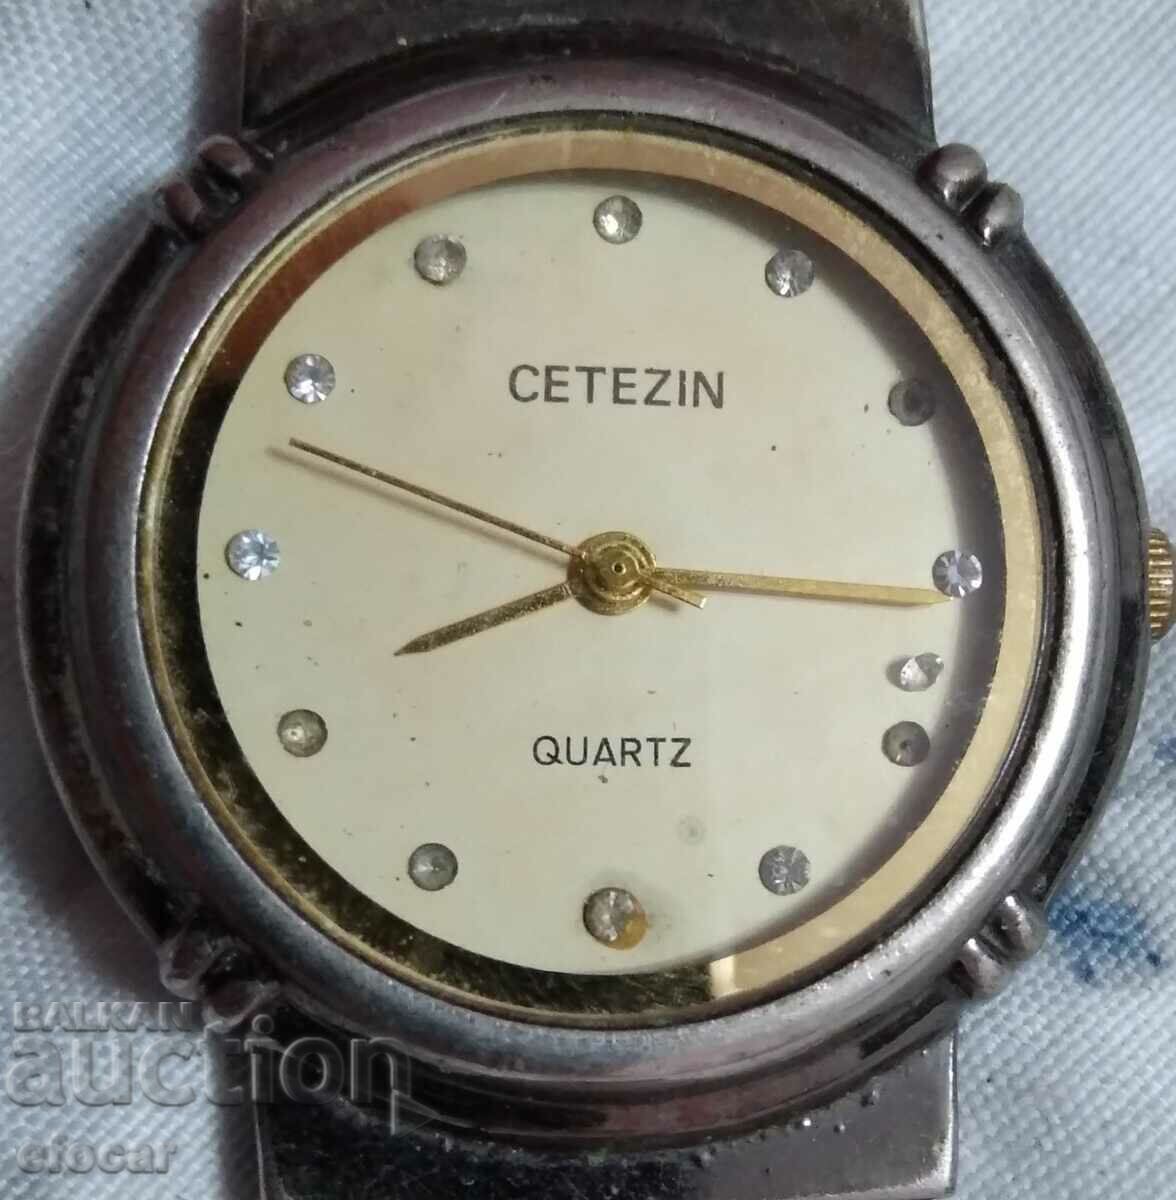 CETEZEN watch starting from 0.01st